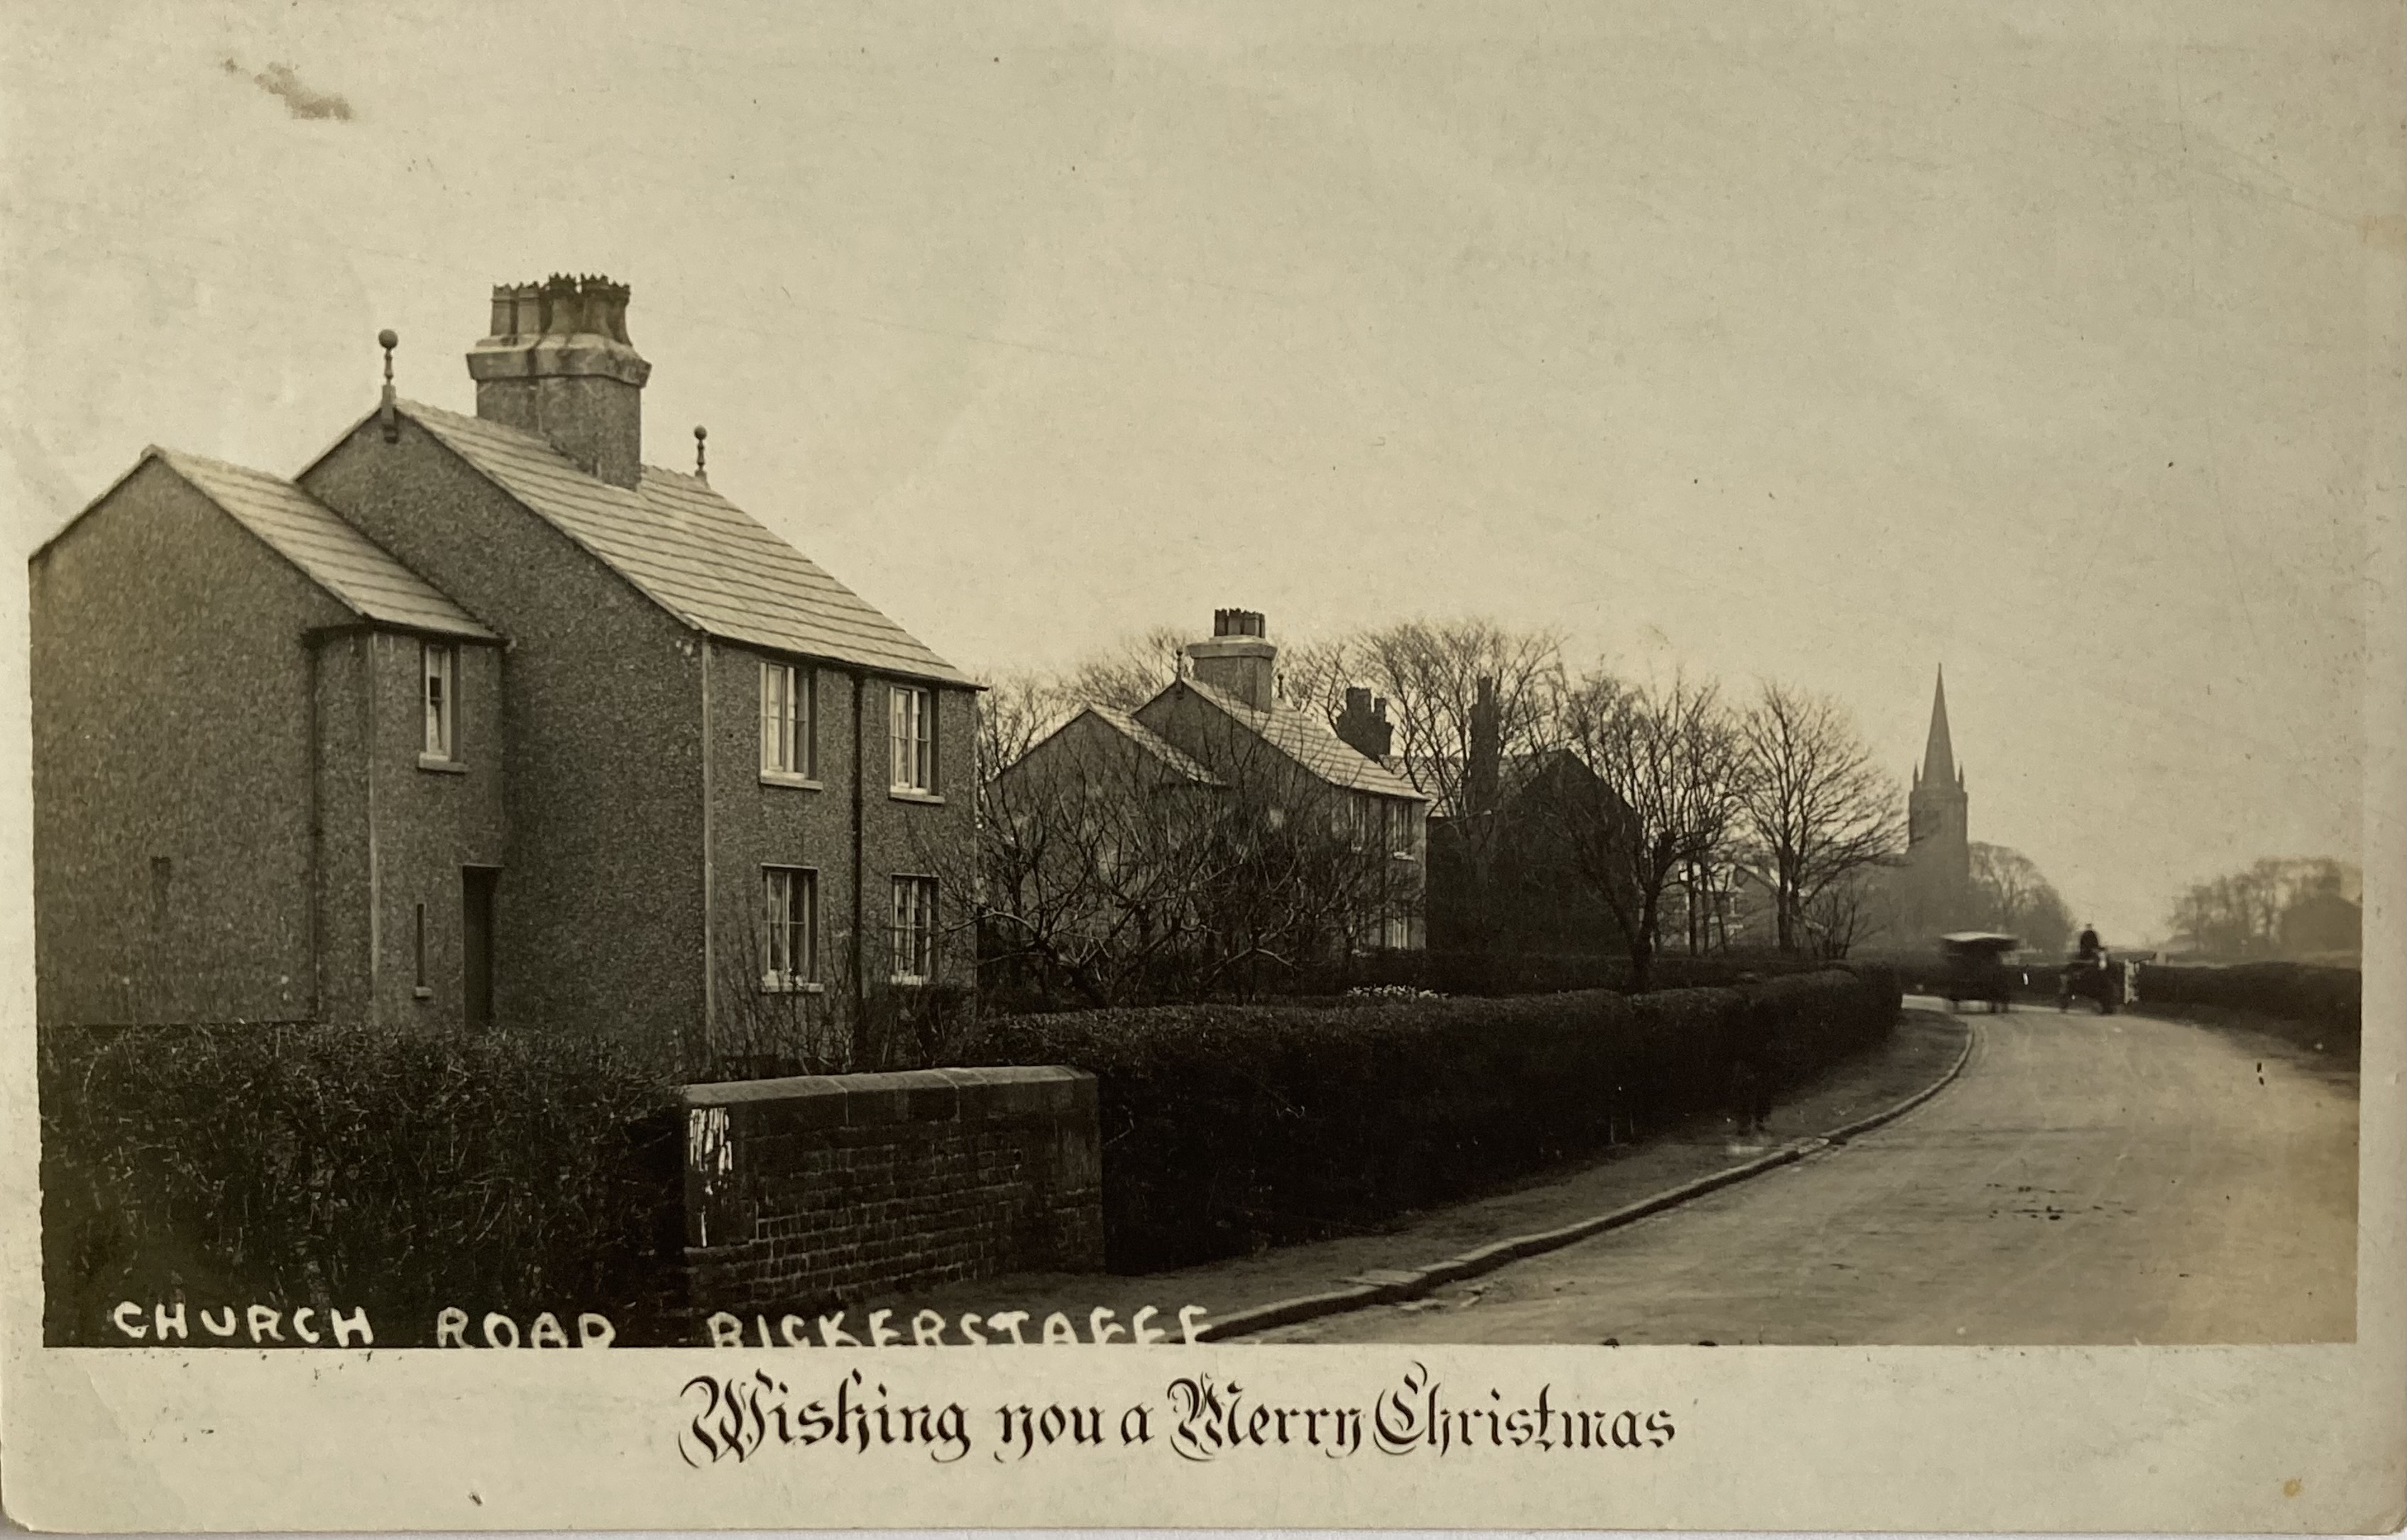 Church Road Bickerstaffe. Posted 1910